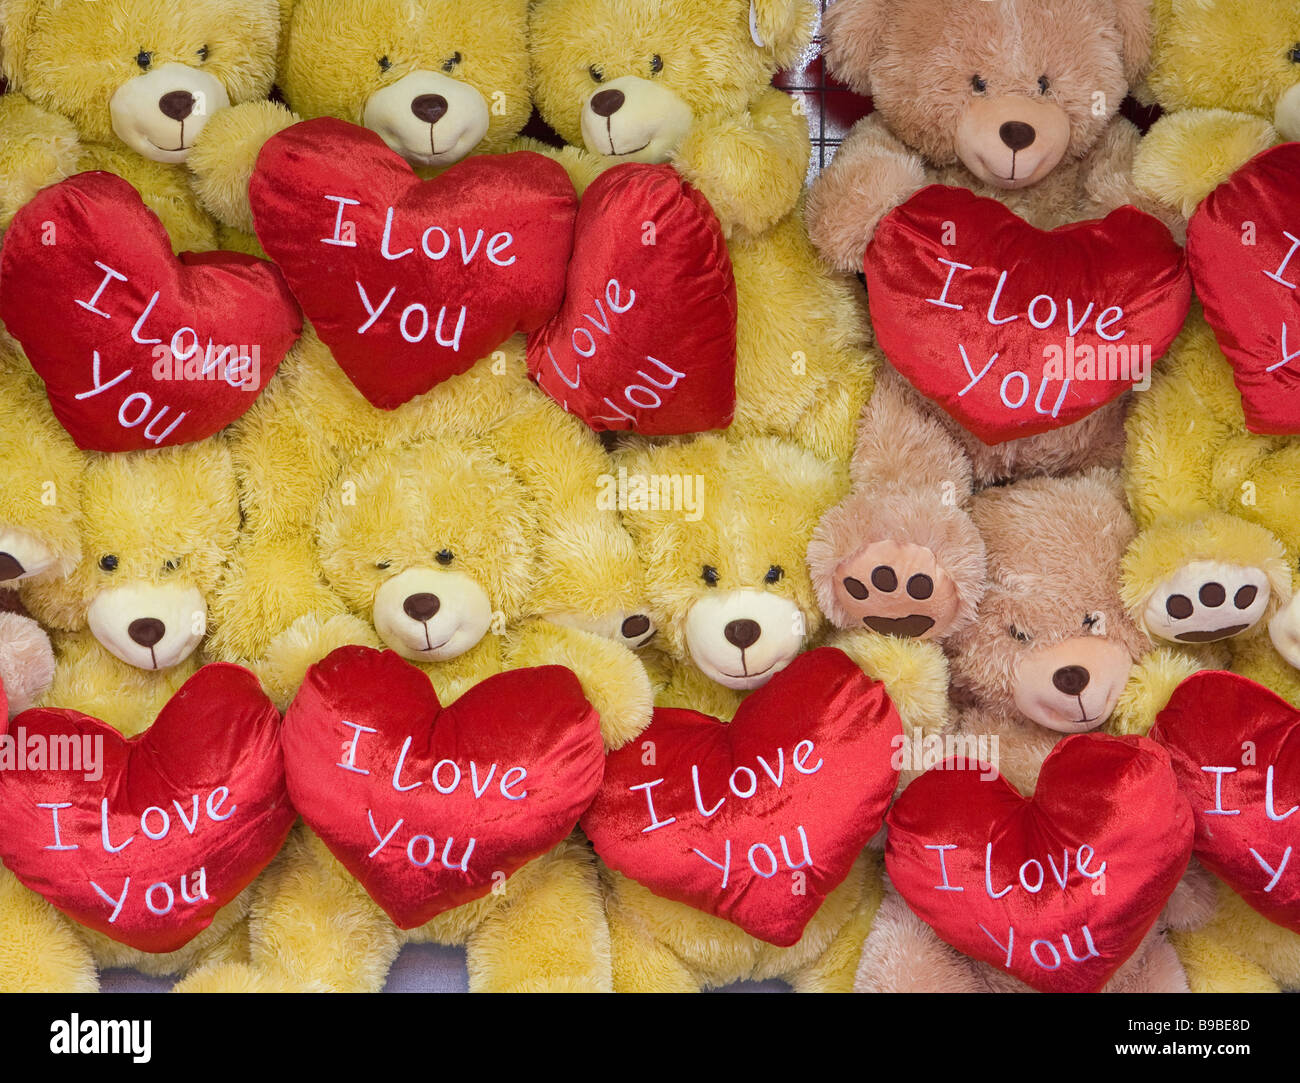 Teddy bears with I love you hearts Stock Photo